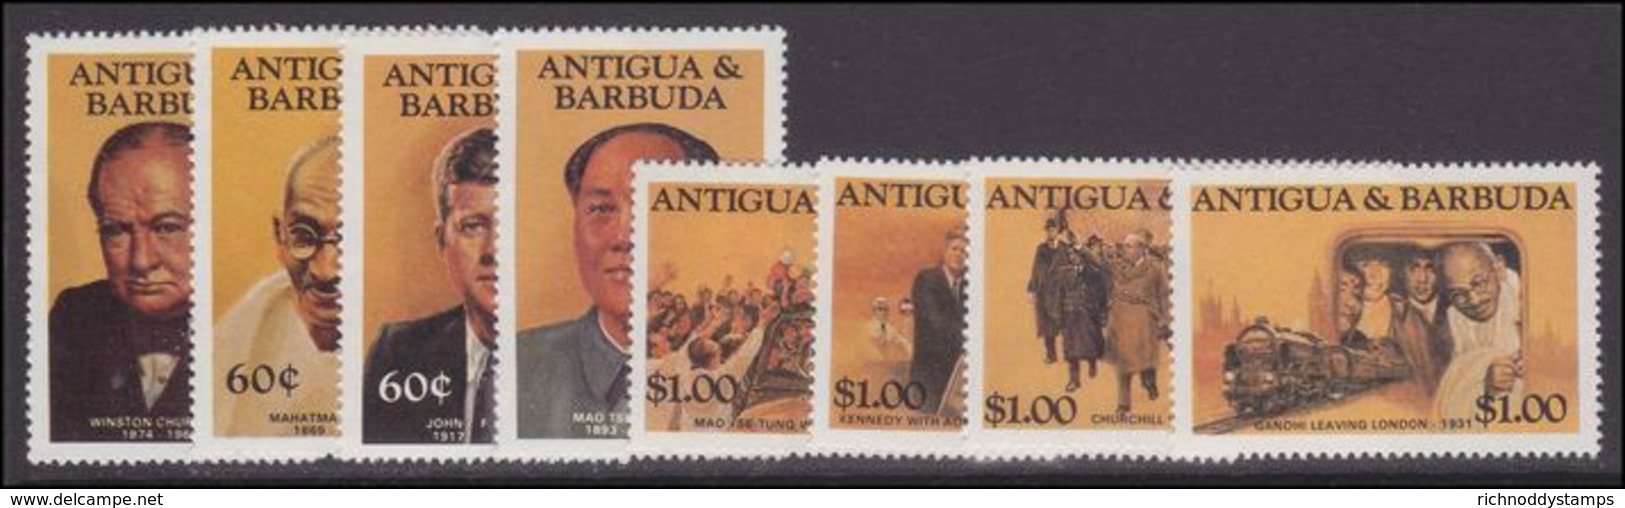 Antigua 1984 Famous People Unmounted Mint. - Antigua And Barbuda (1981-...)